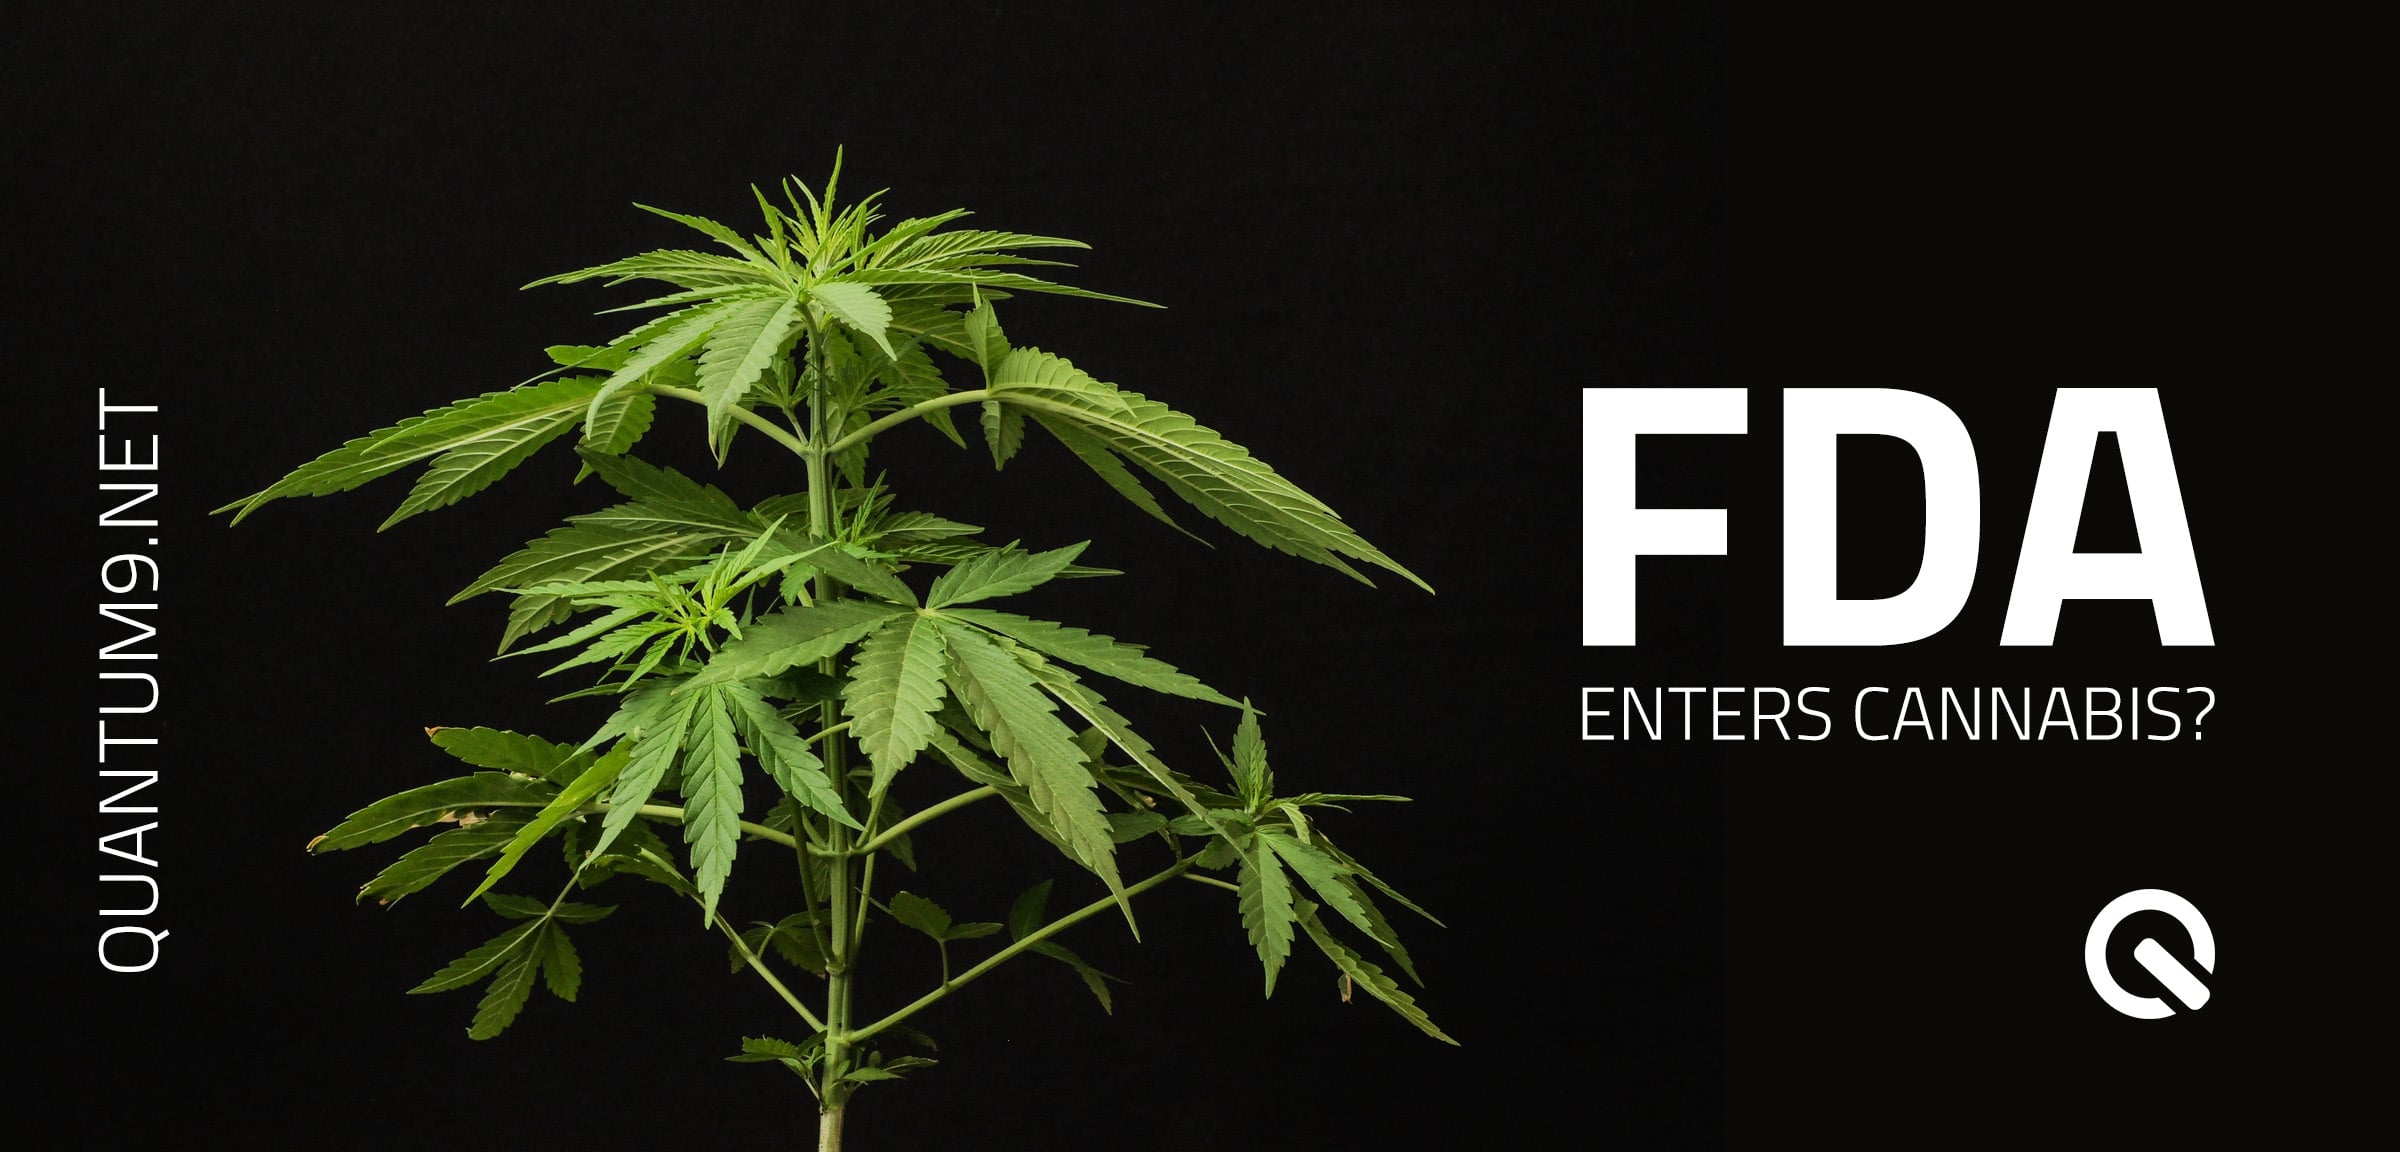 FDA Enters Cannabis